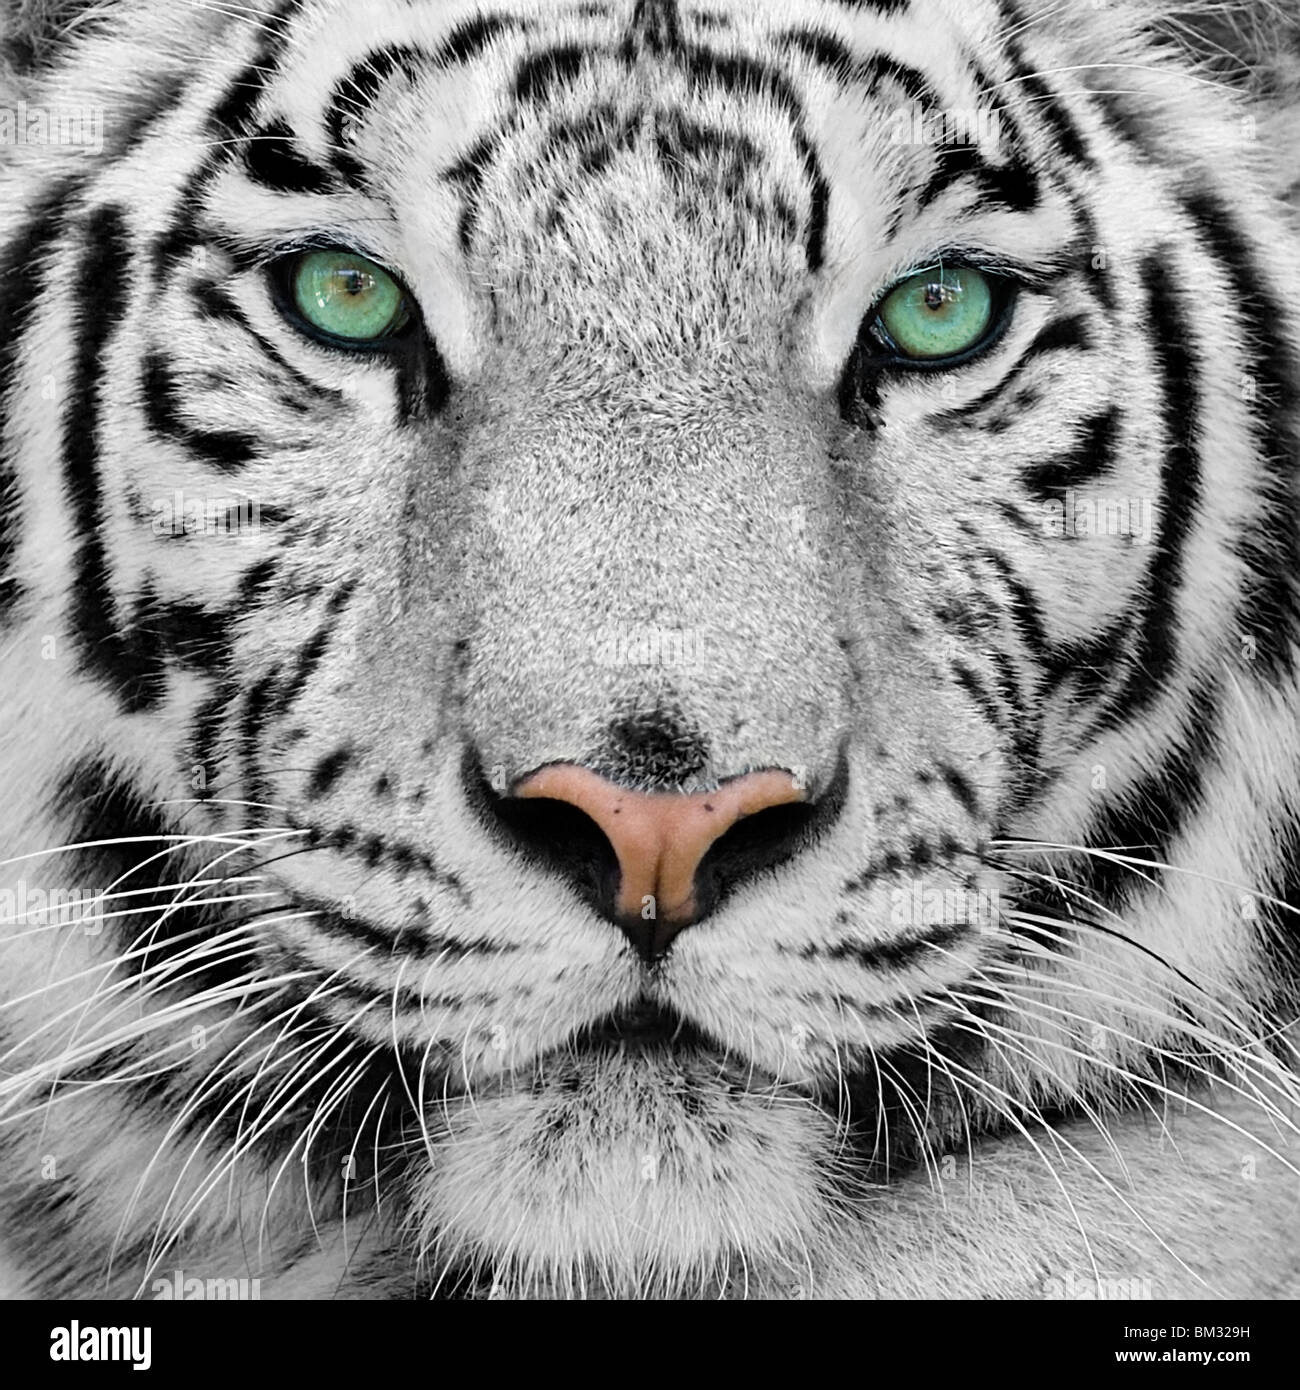 WHITE TIGER Close-Up 8.5 x 11 PHOTO